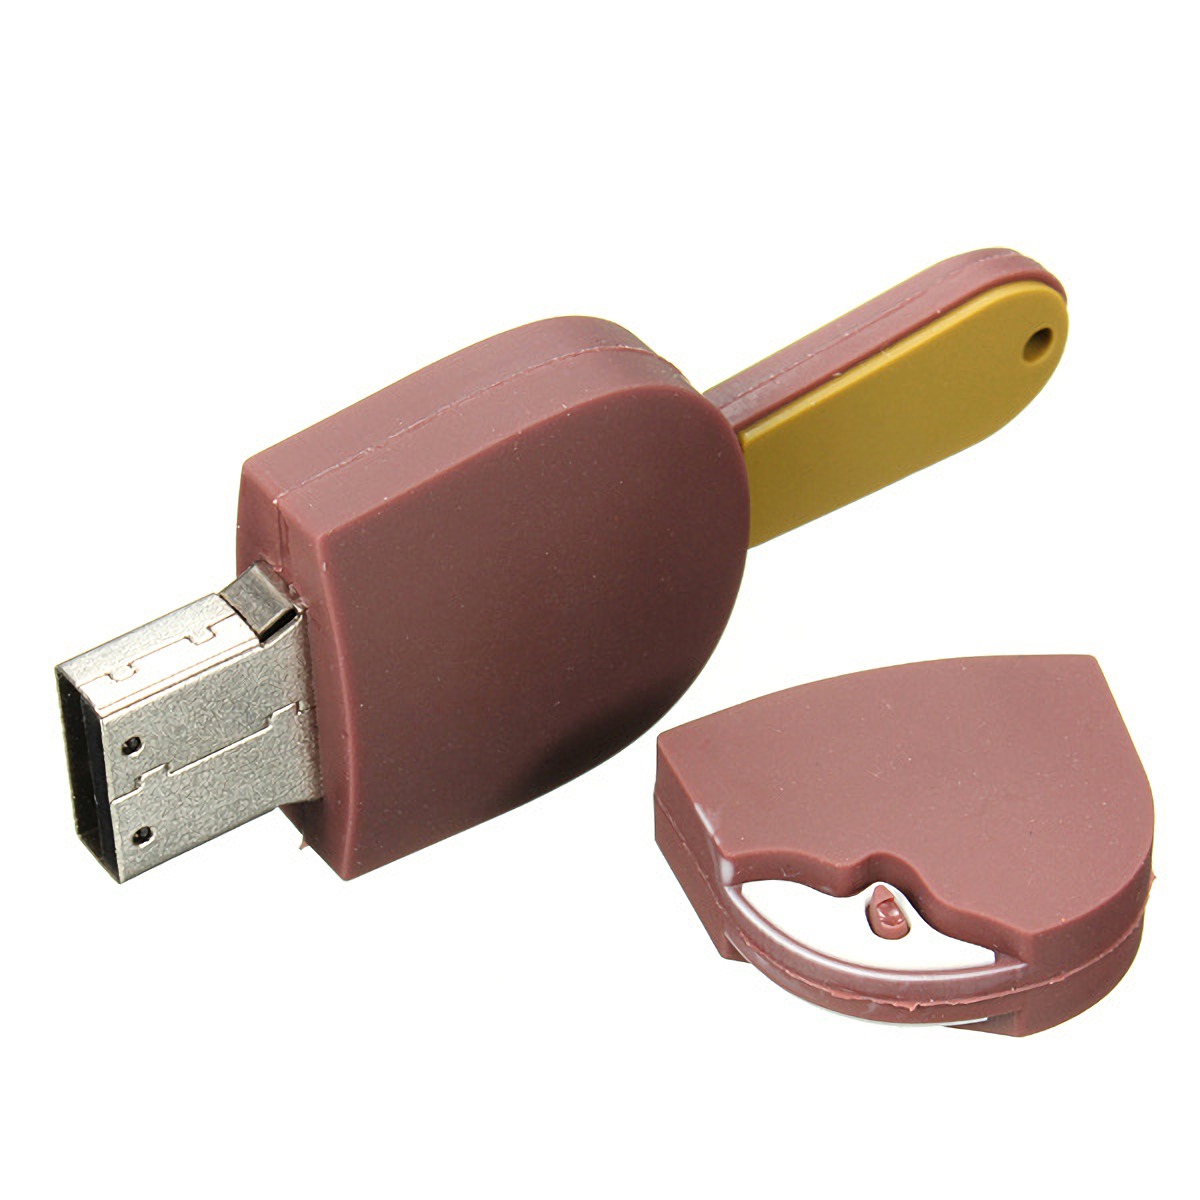 16GB-USB20-Chocolate-Ice-Cream-Model-Flash-Drive-Memory-U-Disk-961651-6